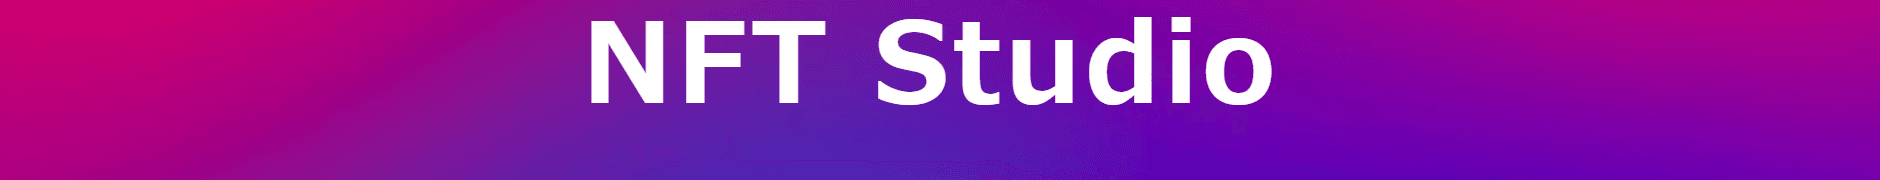 NFTStudio_com banner